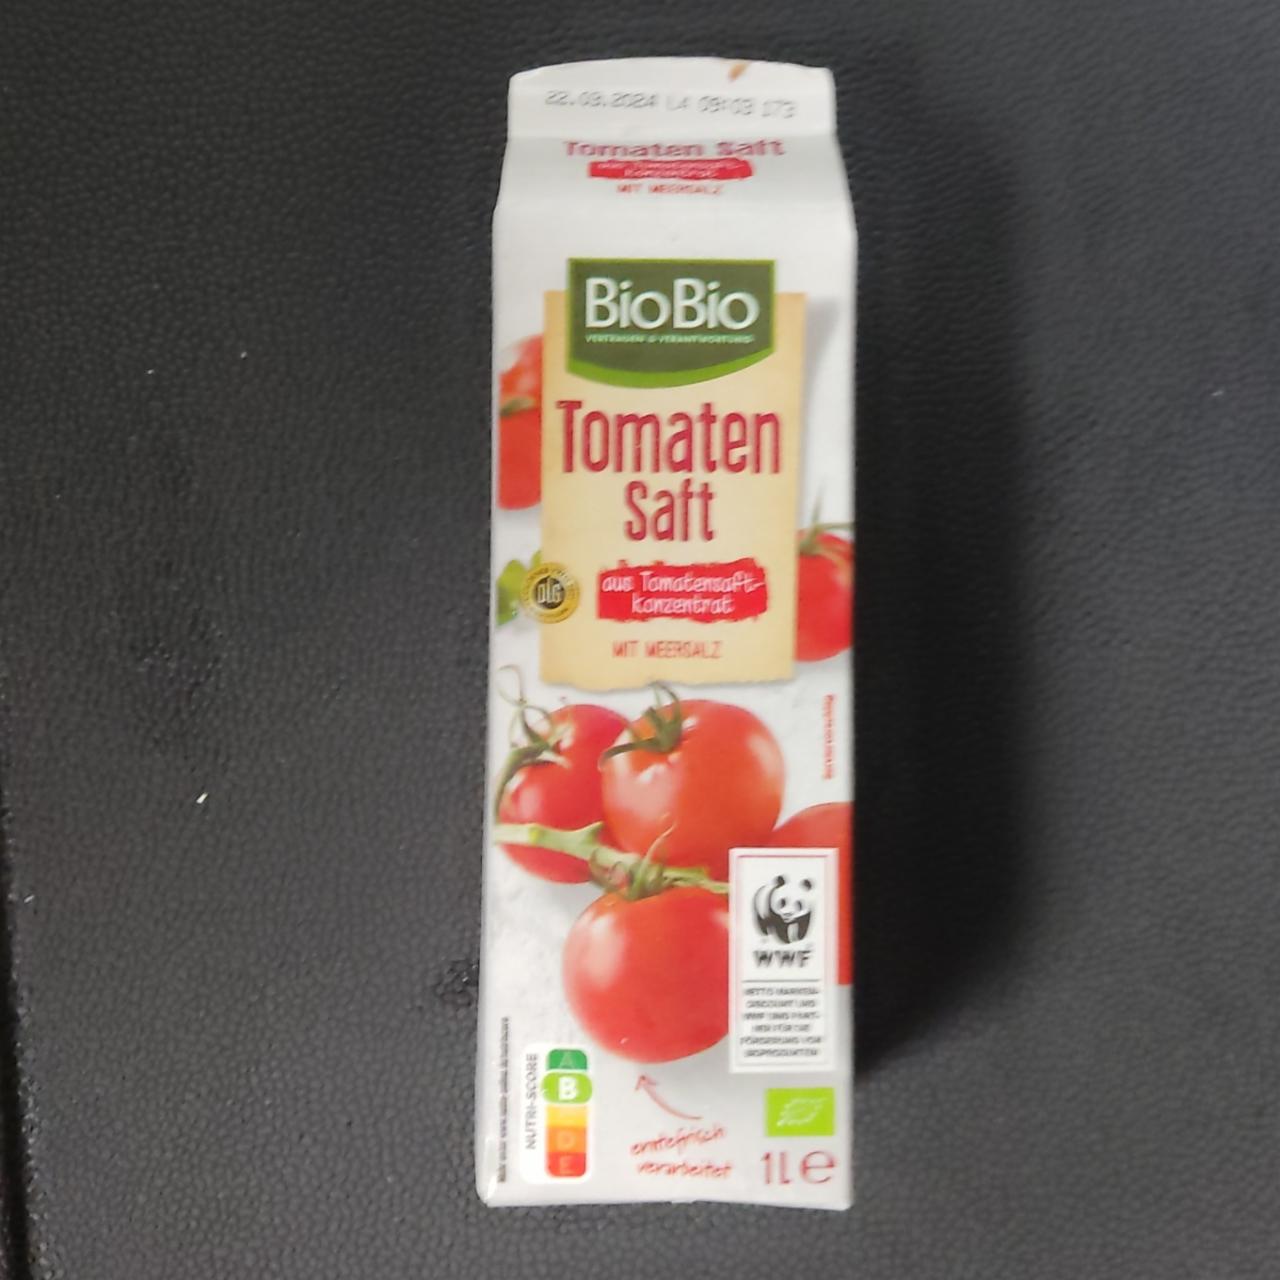 Fotografie - Tomaten Saft mit Meersalz BioBio